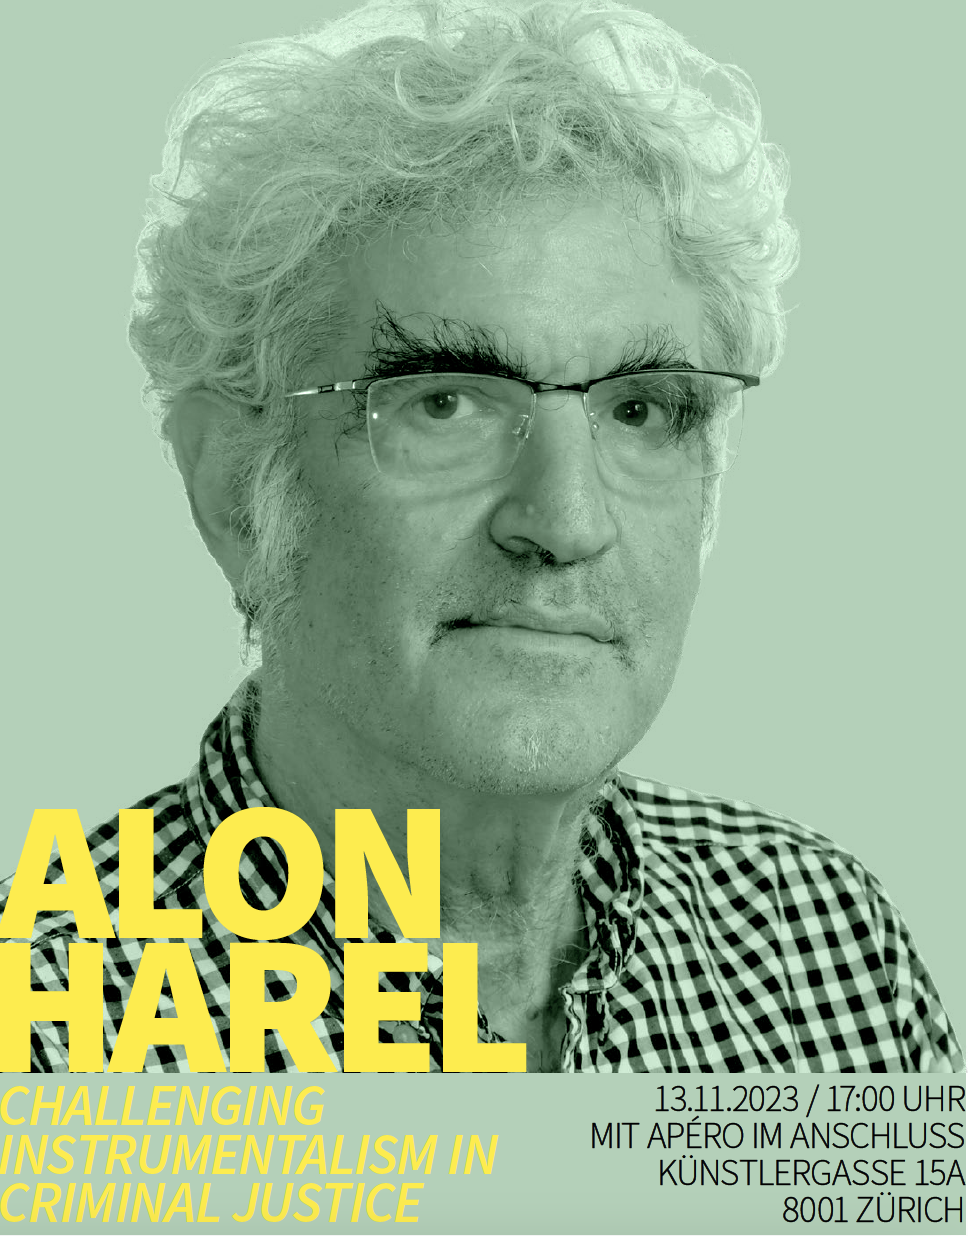 Alon Harel